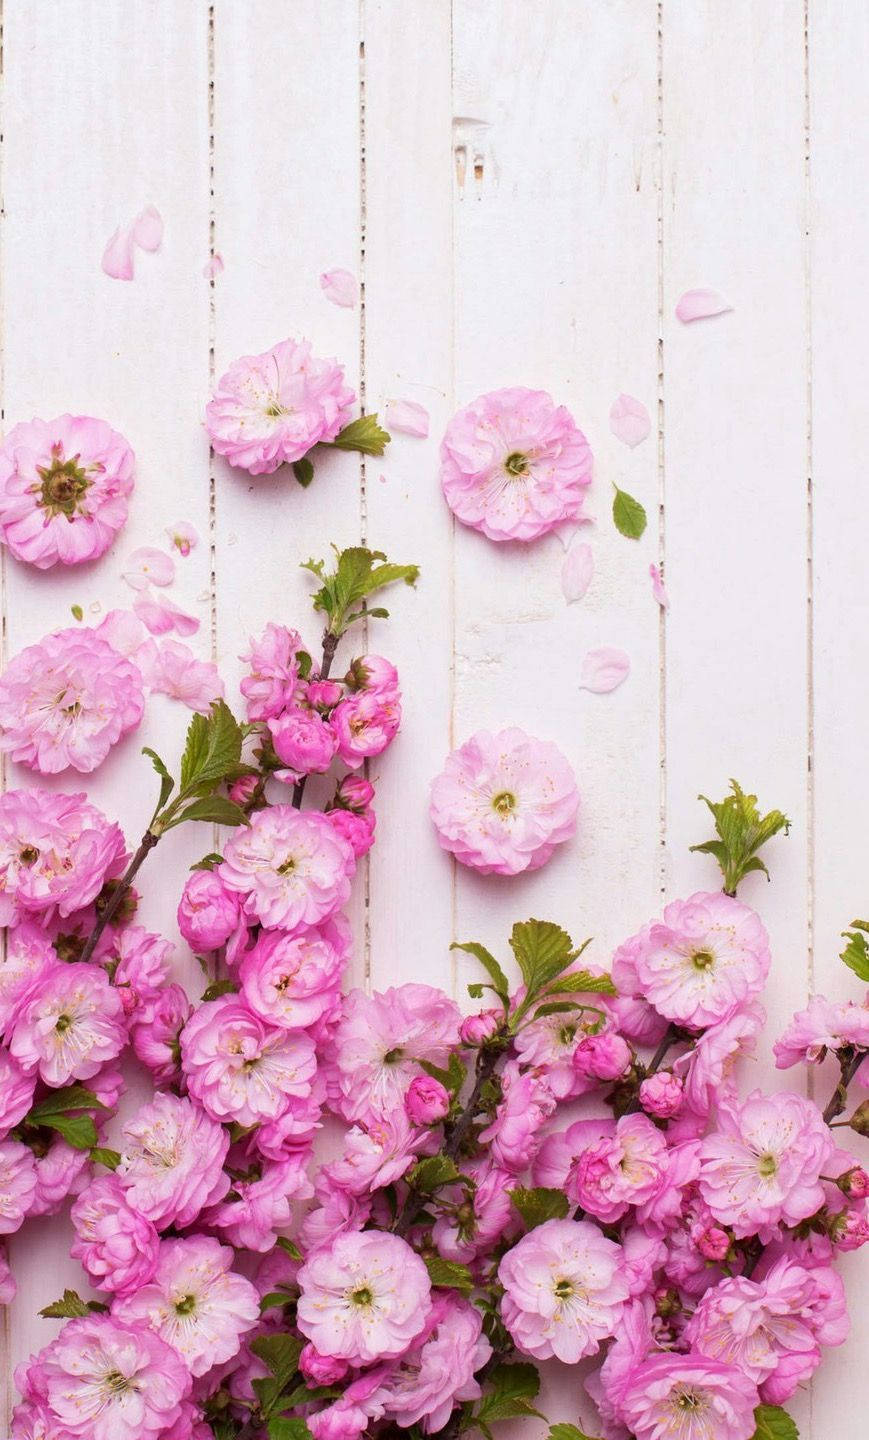 Caption: Luxurious Pink Rose Iphone Wallpaper Wallpaper